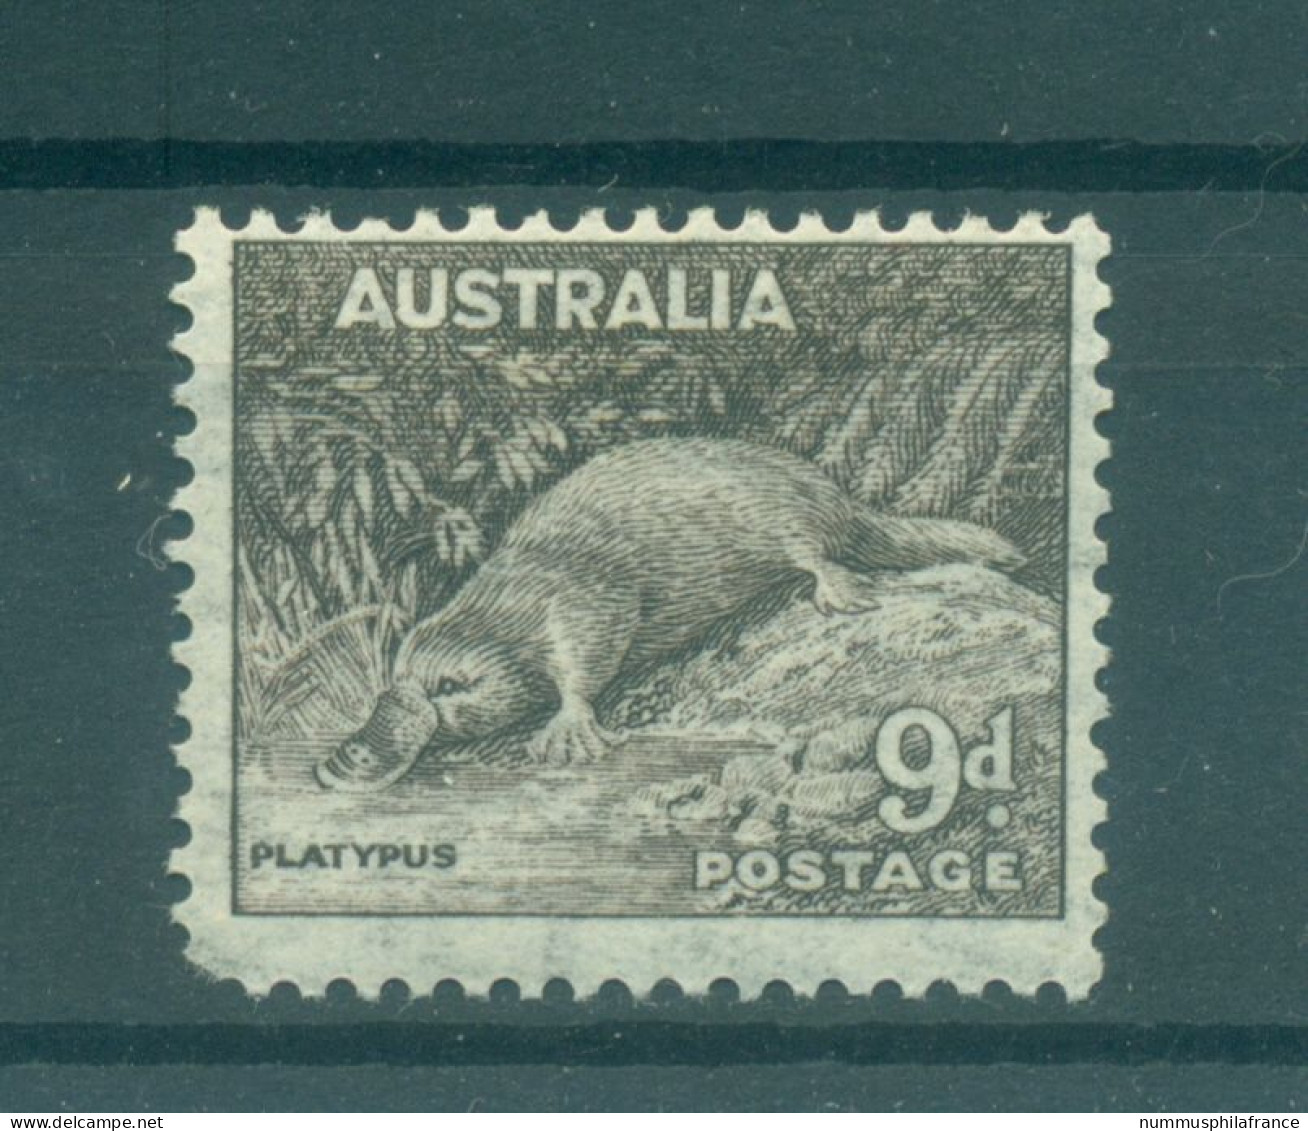 Australie 1937-38 - Y & T N. 117 (A) - Série Courante (Michel N. 147 C) - Ungebraucht